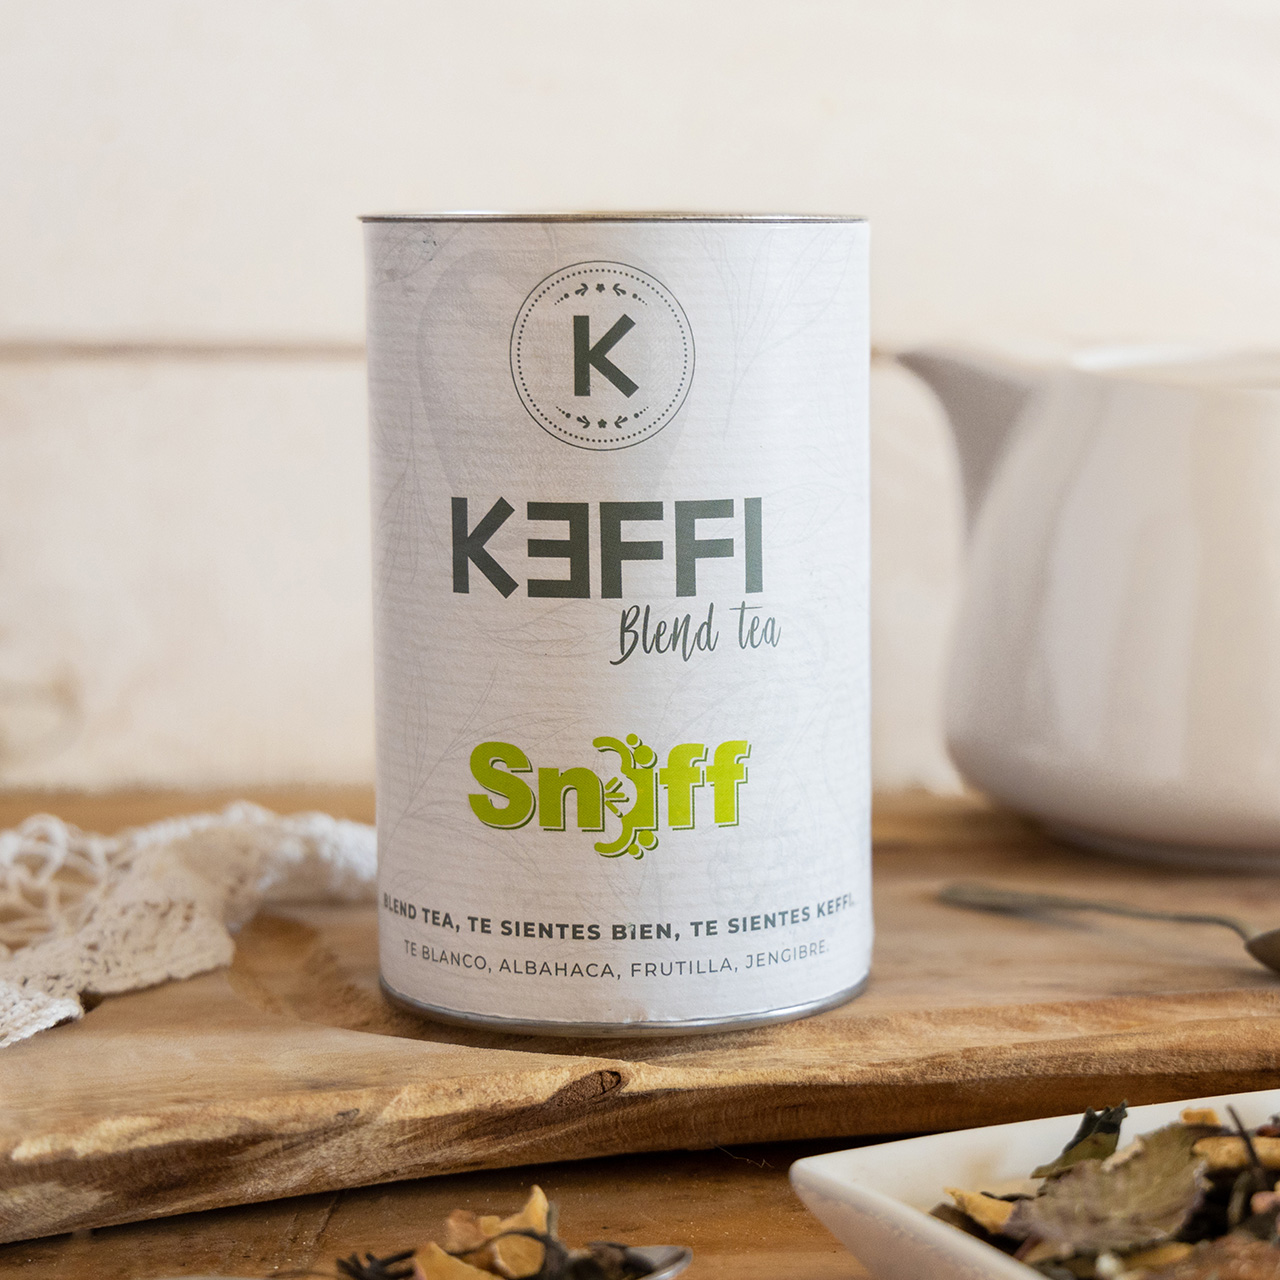 Alergia Blend Tea | Keffi a lifestyle